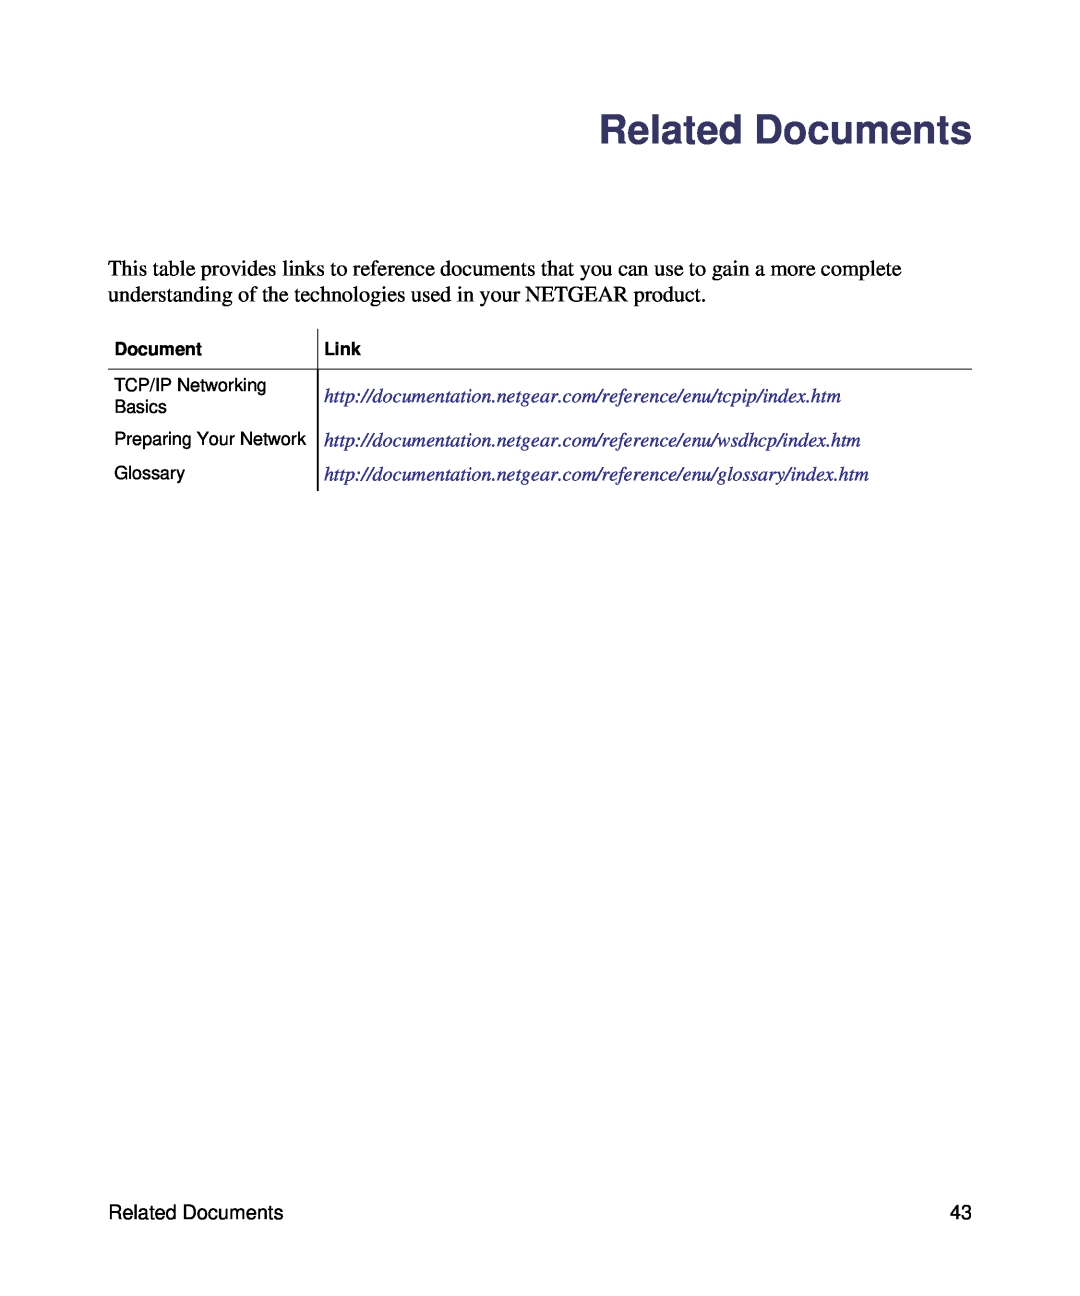 NETGEAR WNDR3400-100NAS manual Related Documents, http//documentation.netgear.com/reference/enu/tcpip/index.htm, Link 